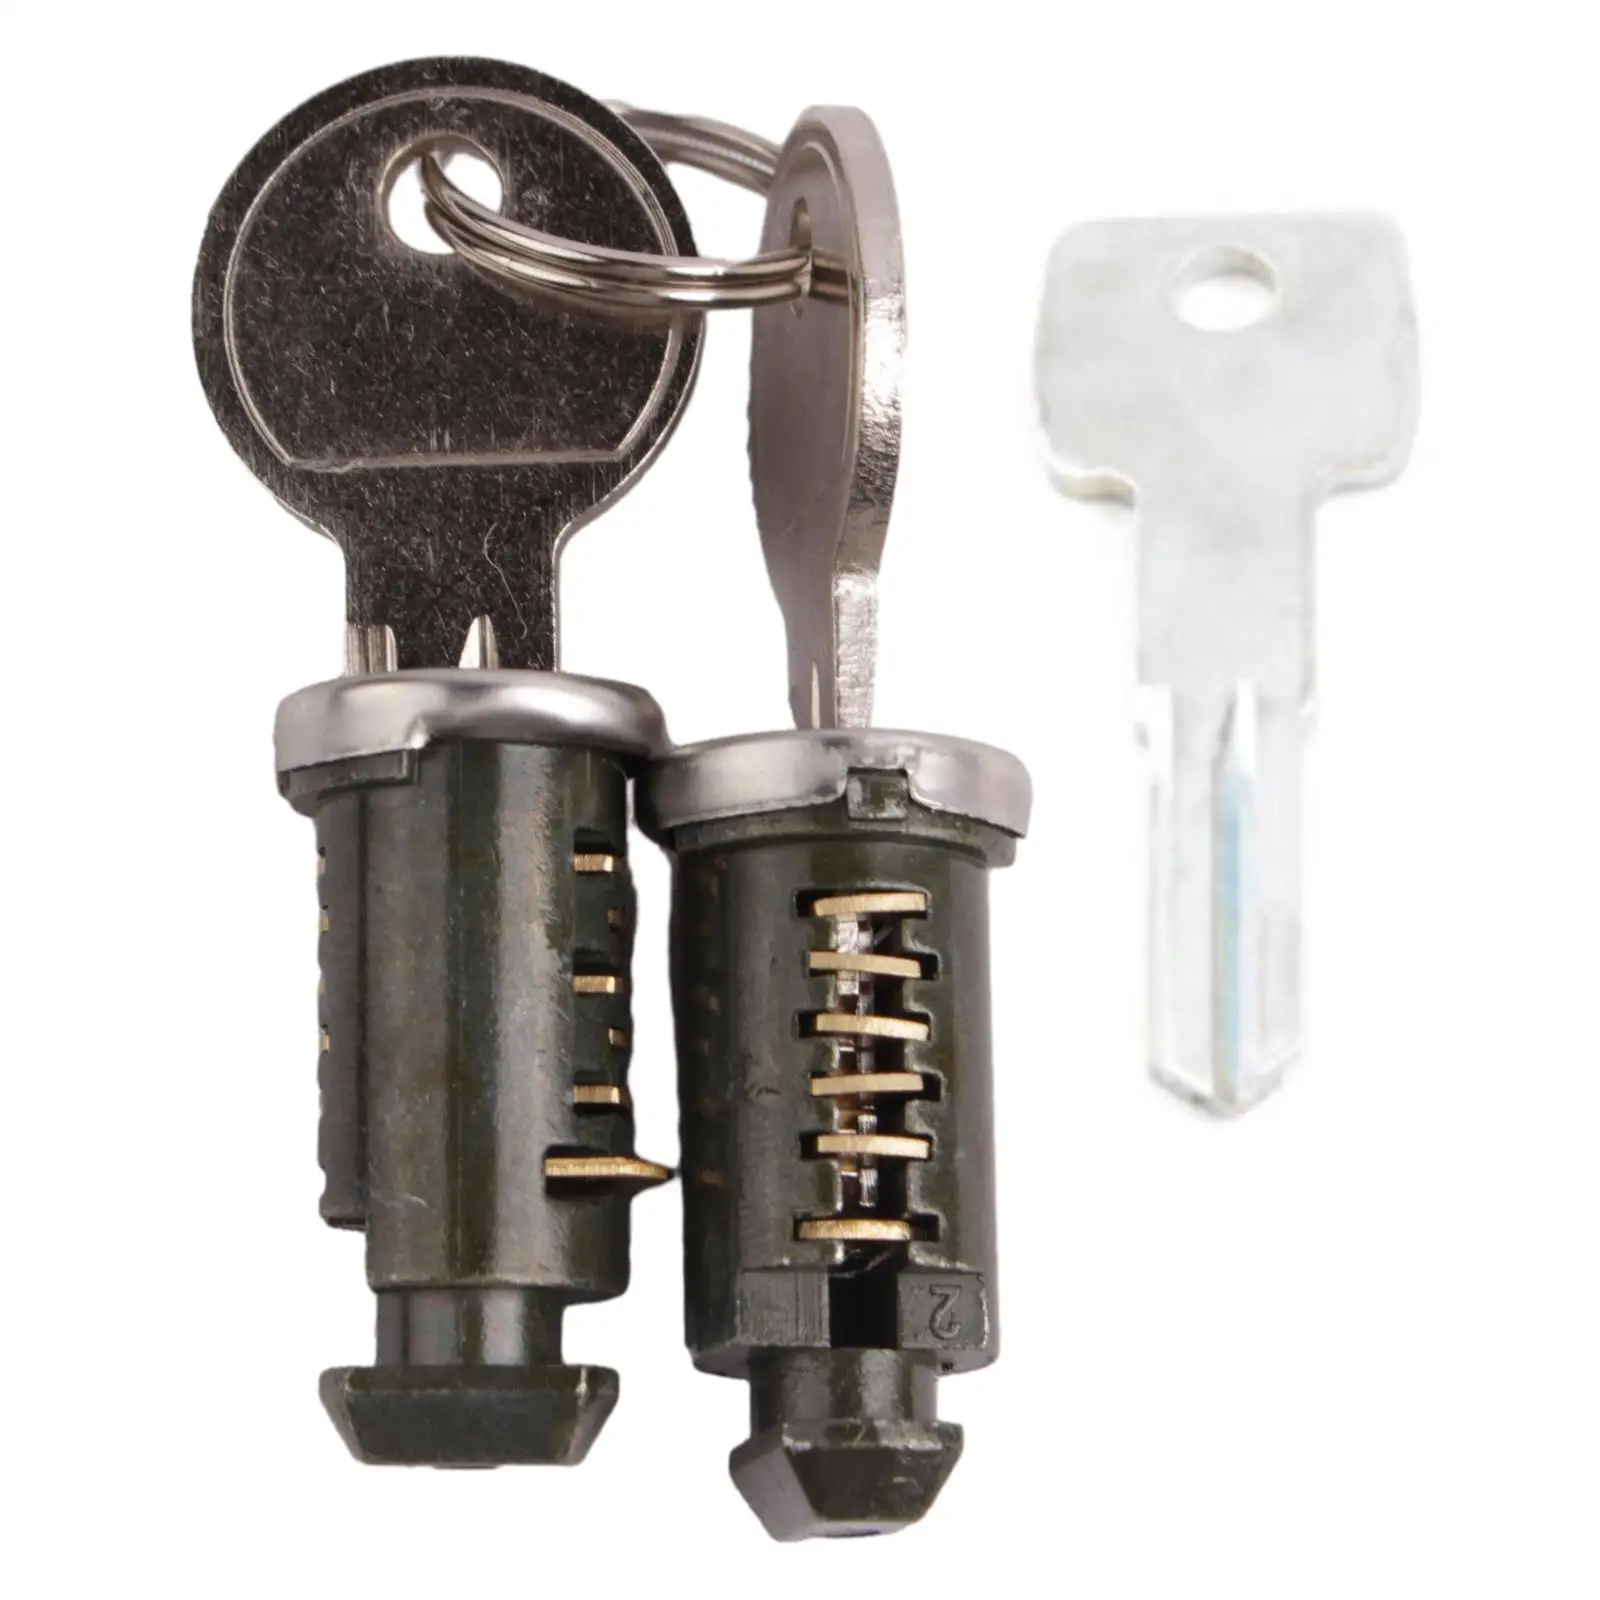 Lock Cylinders for Car Racks System Detachable Car Rack Parts Locks Keys Professional Lock Core for SUV Car Rack Locks durable